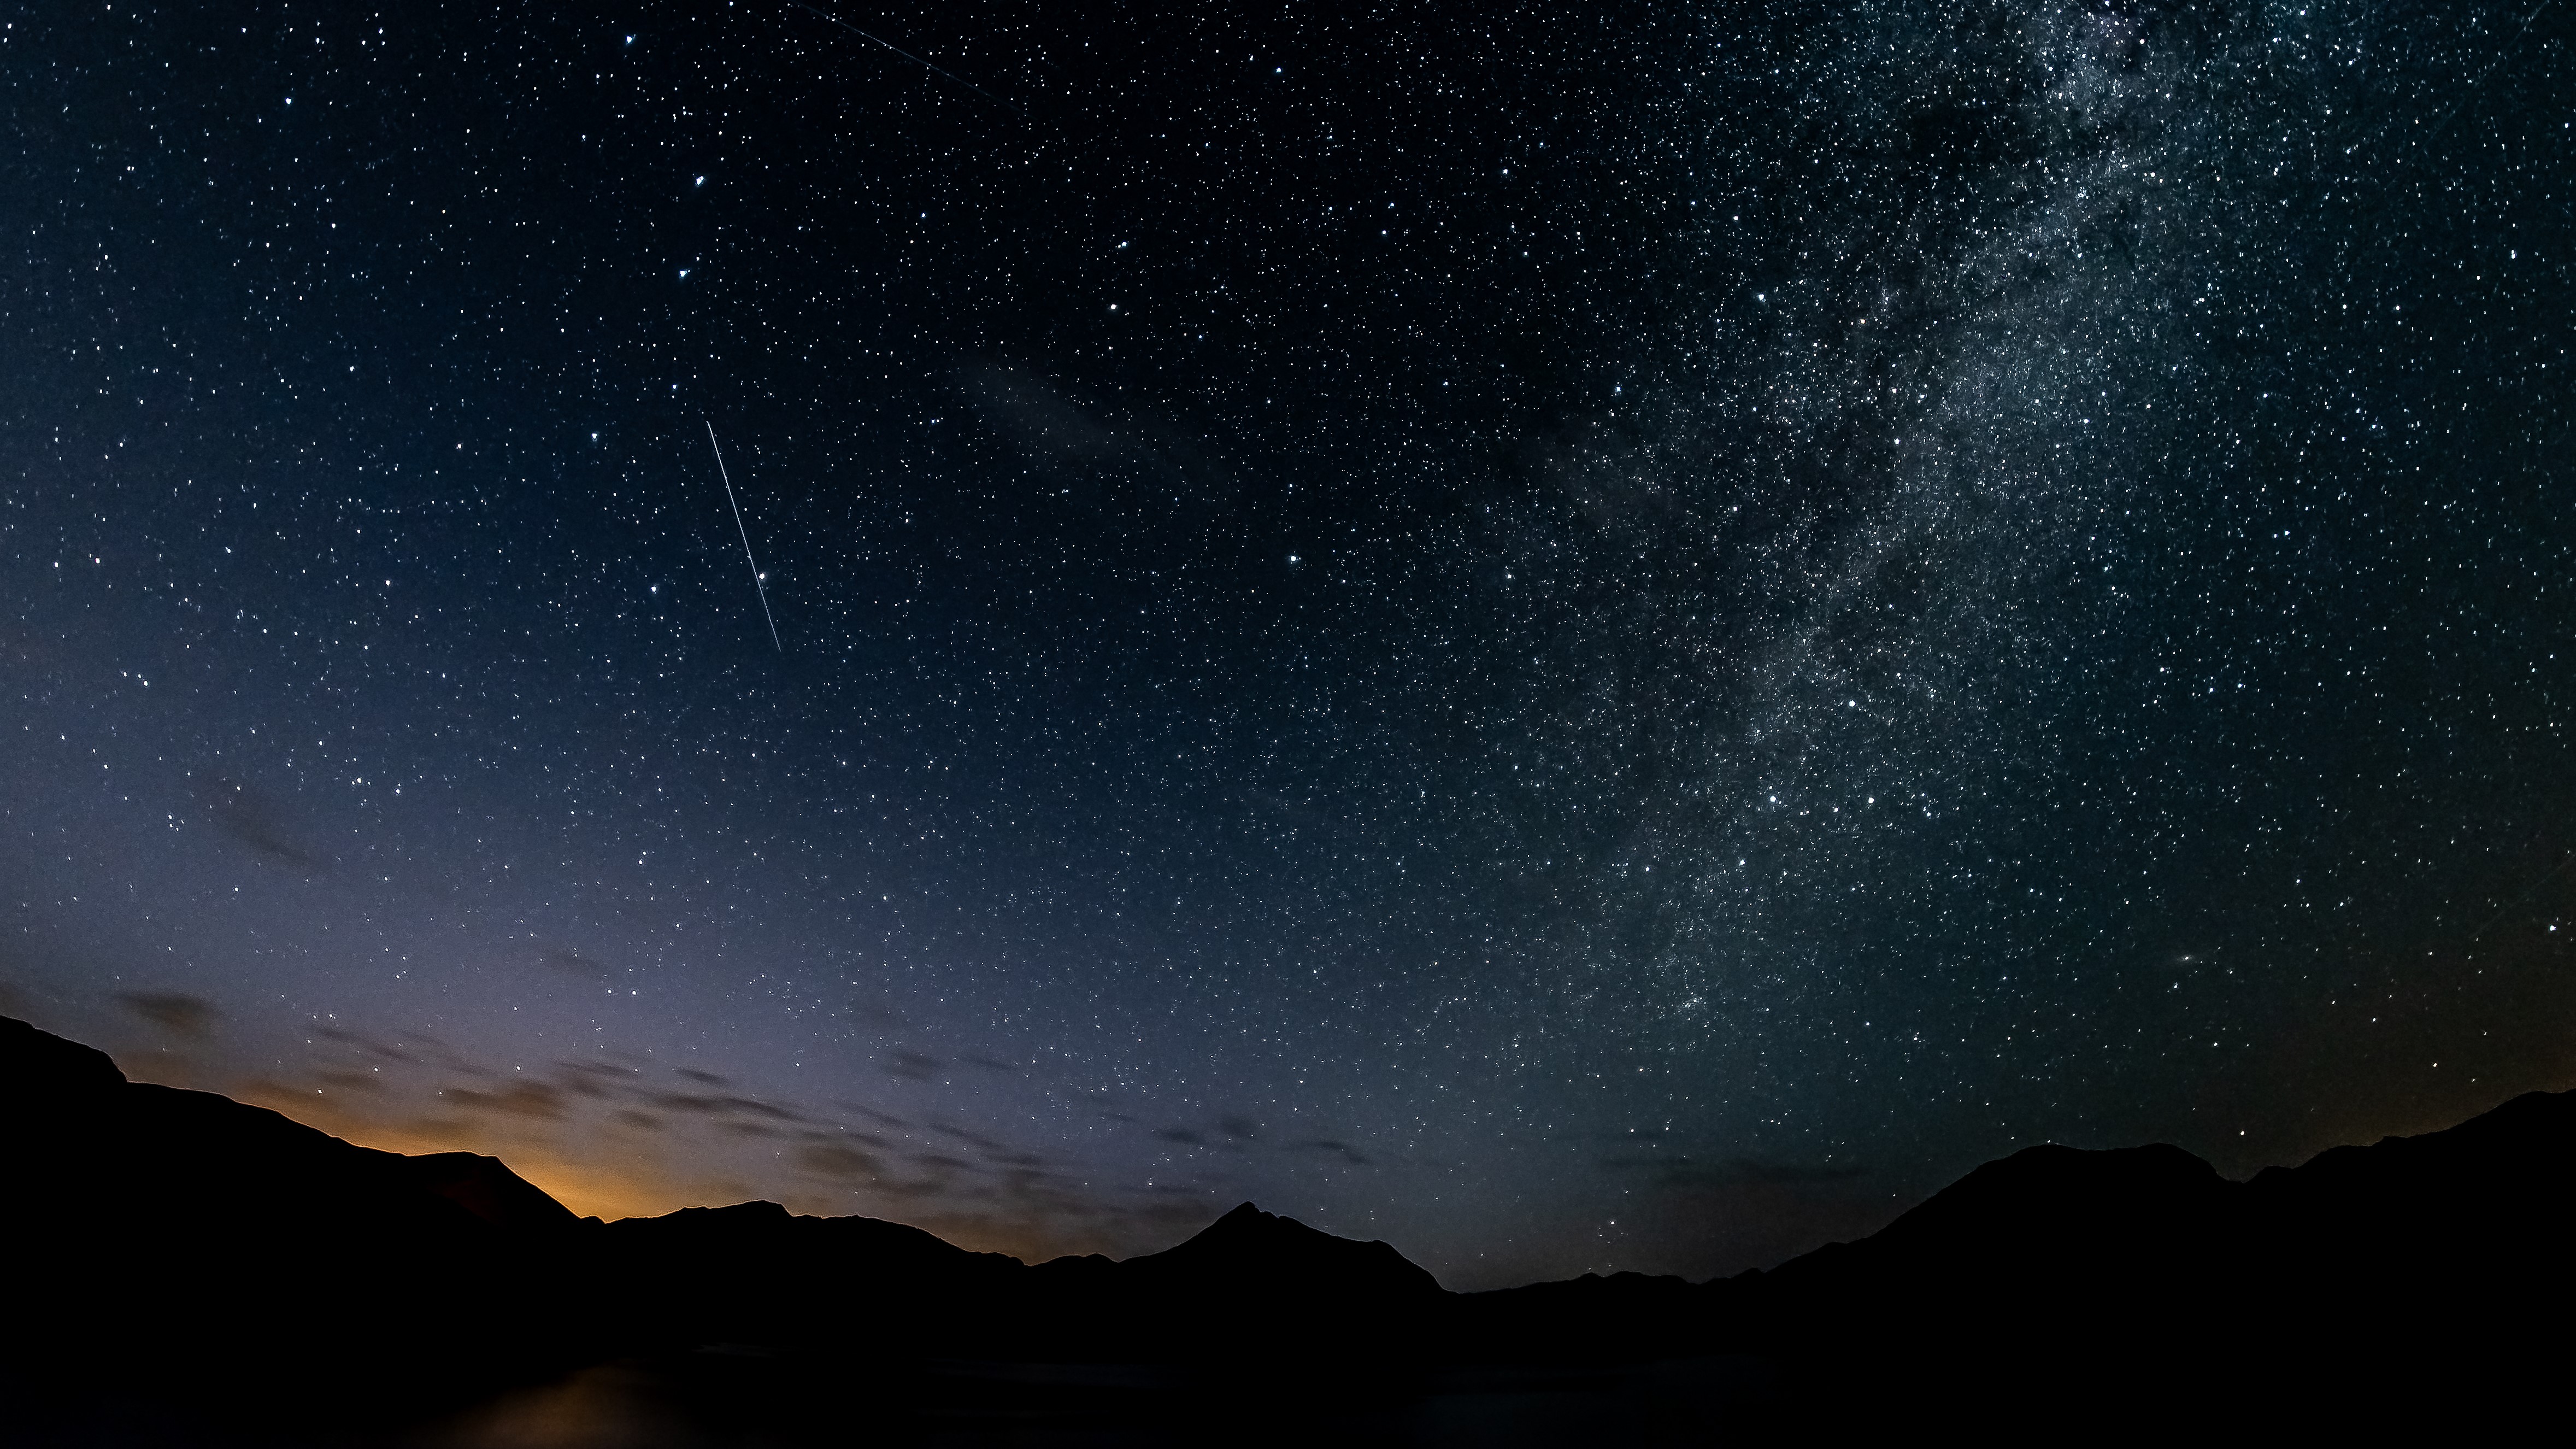 Meteors falling across a sky full of stars.